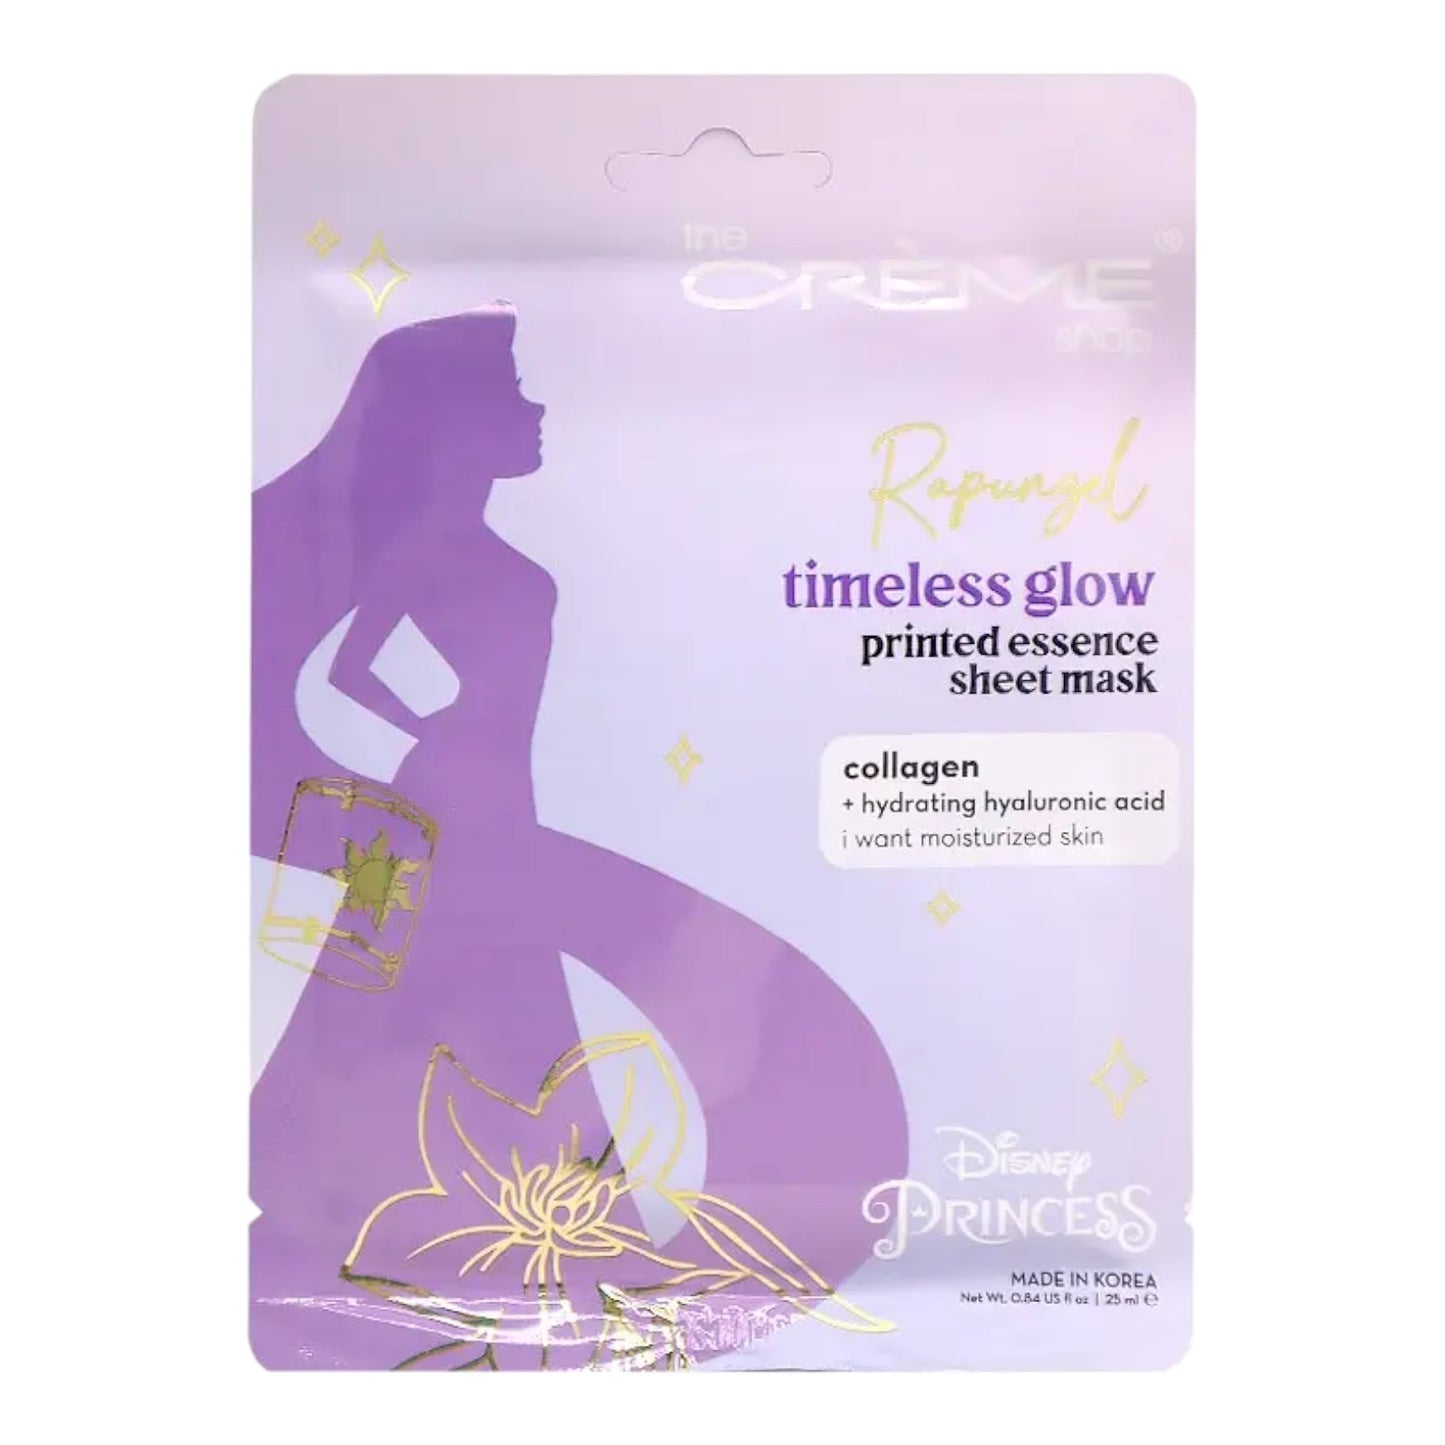 Rapunzel Timeless Glow Printed Essence Sheet Mask - The Creme Shop X Disney